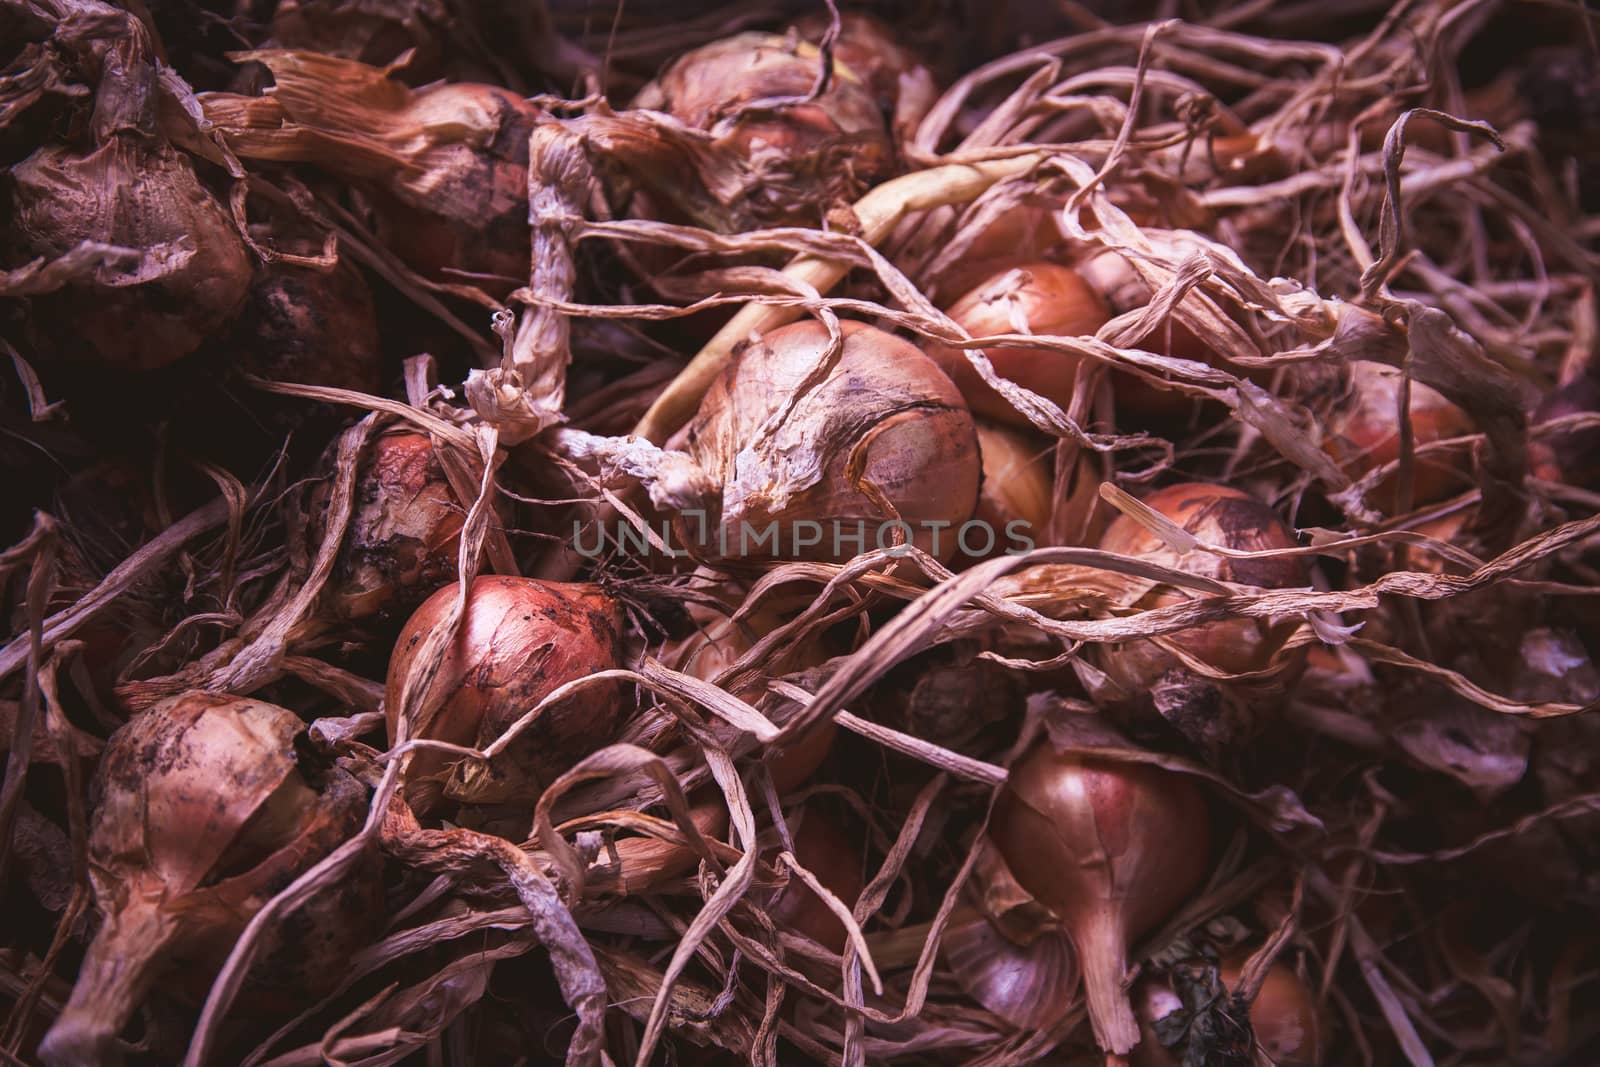 Crop of Onions by magicbones